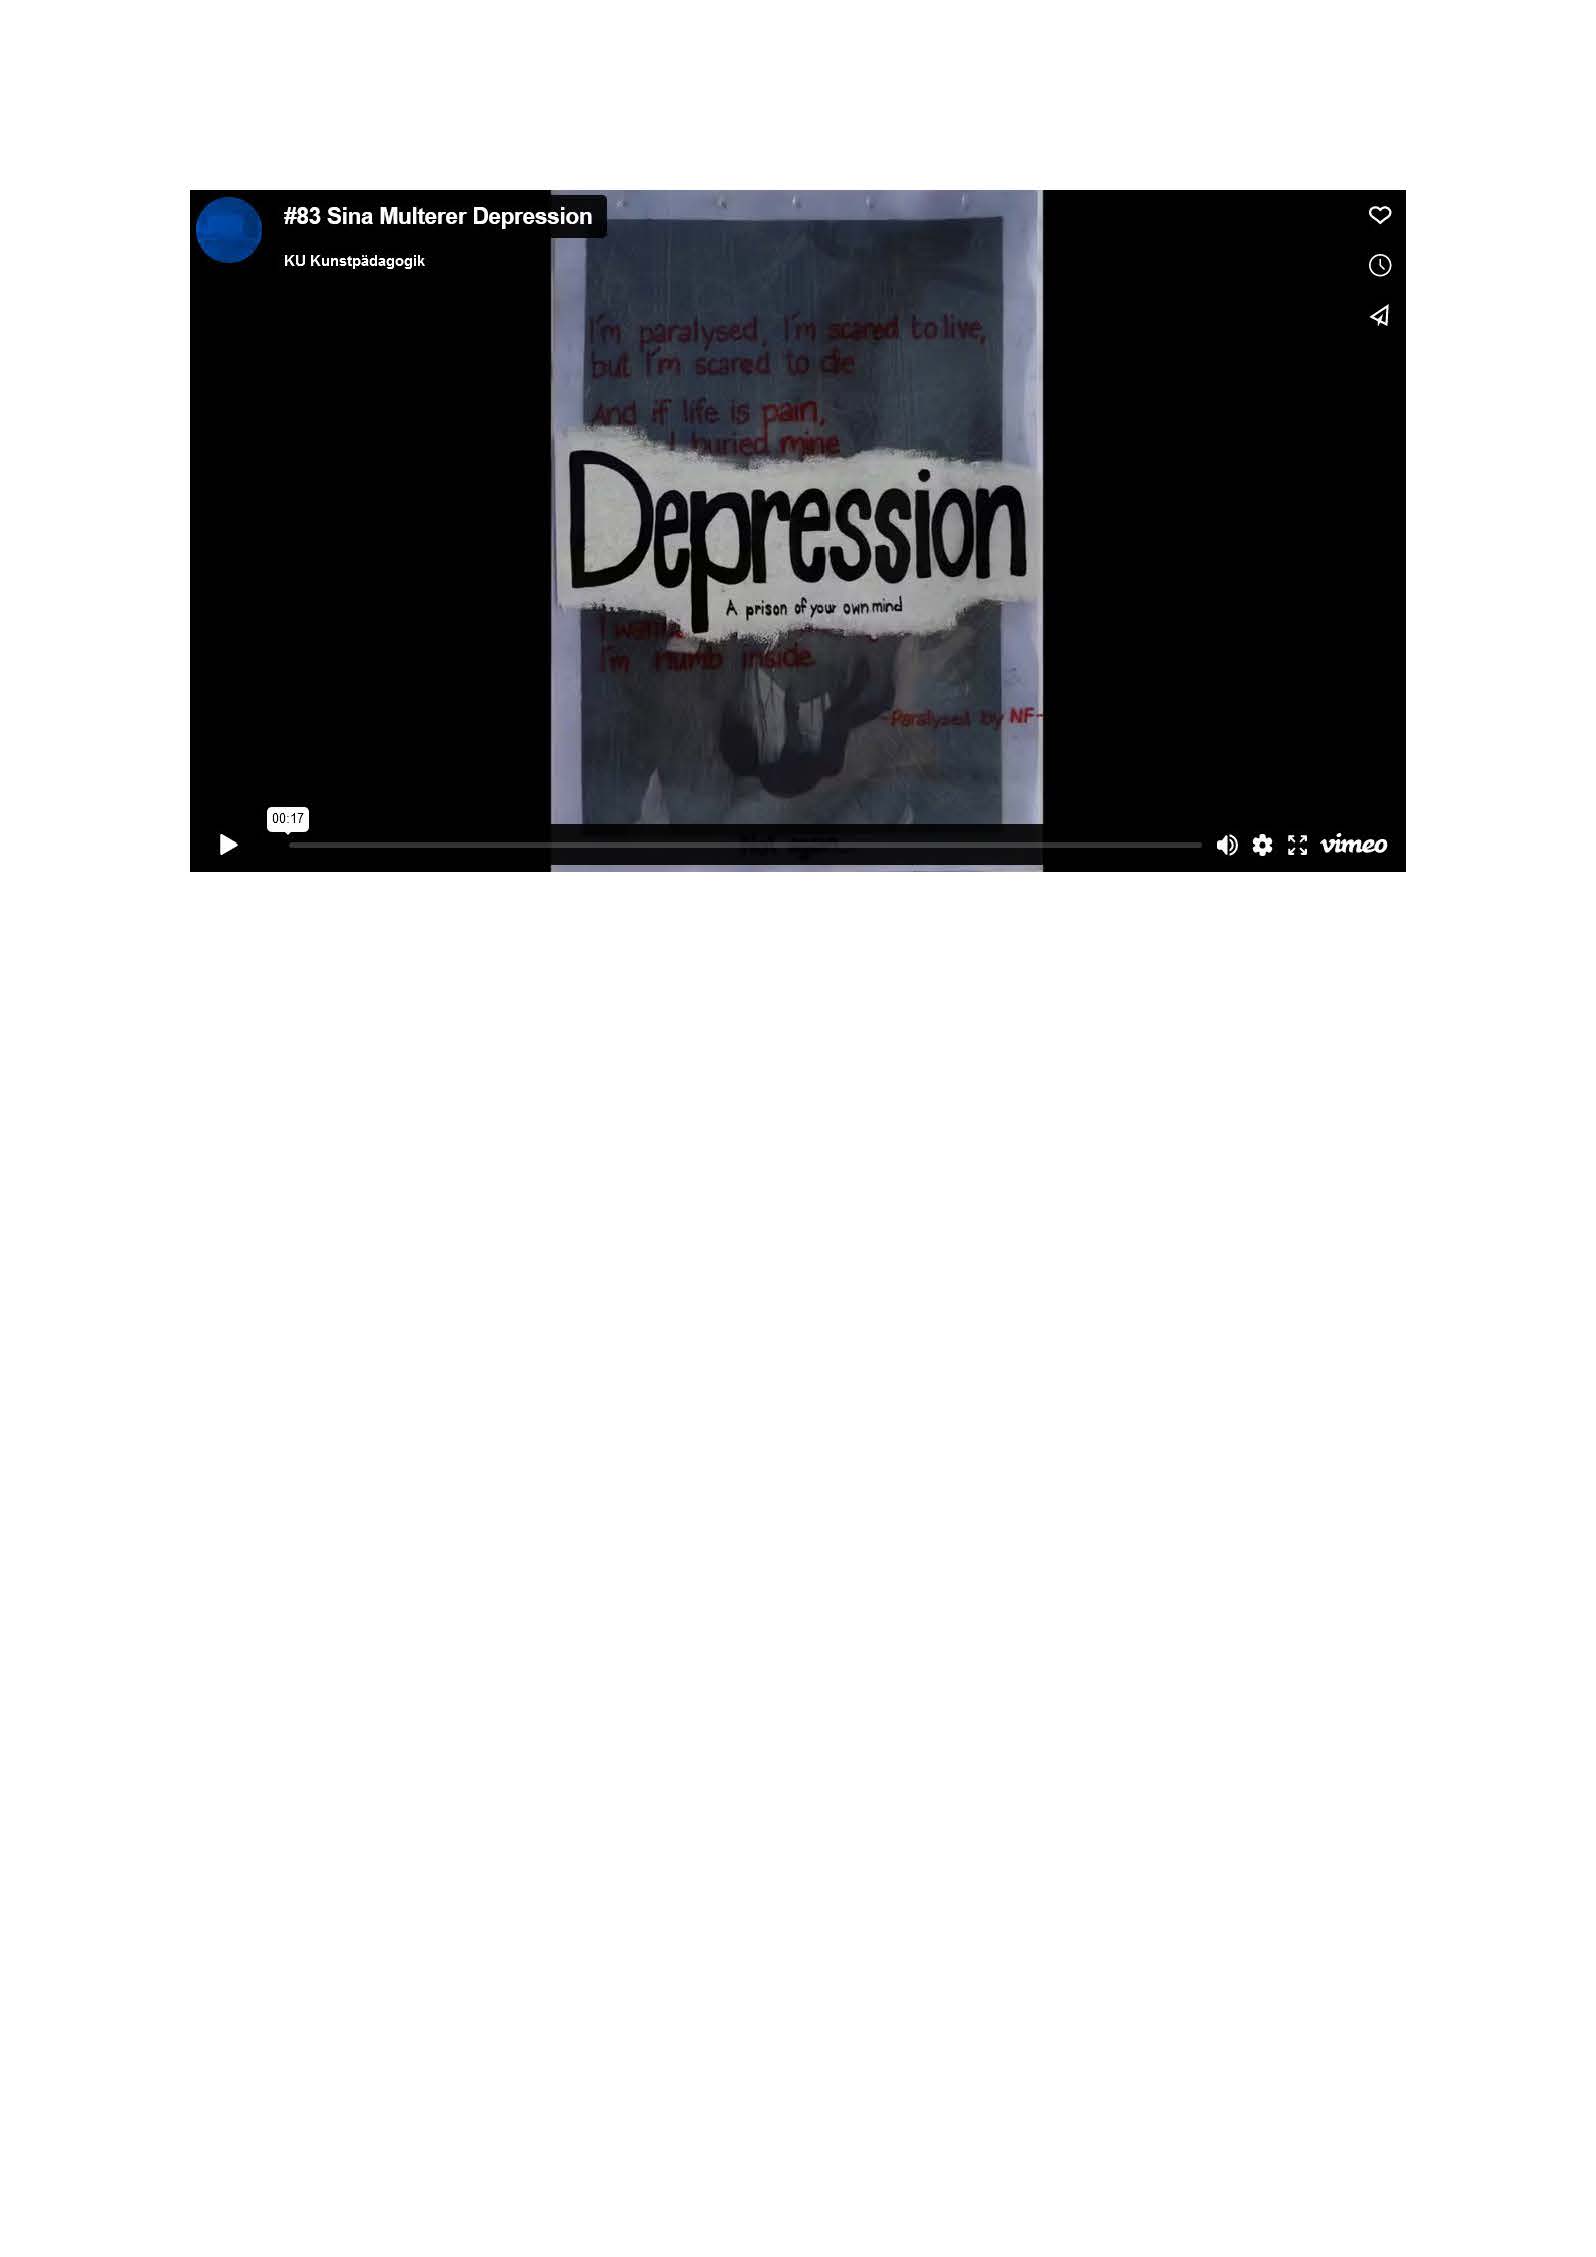 Video4_Depression.jpg